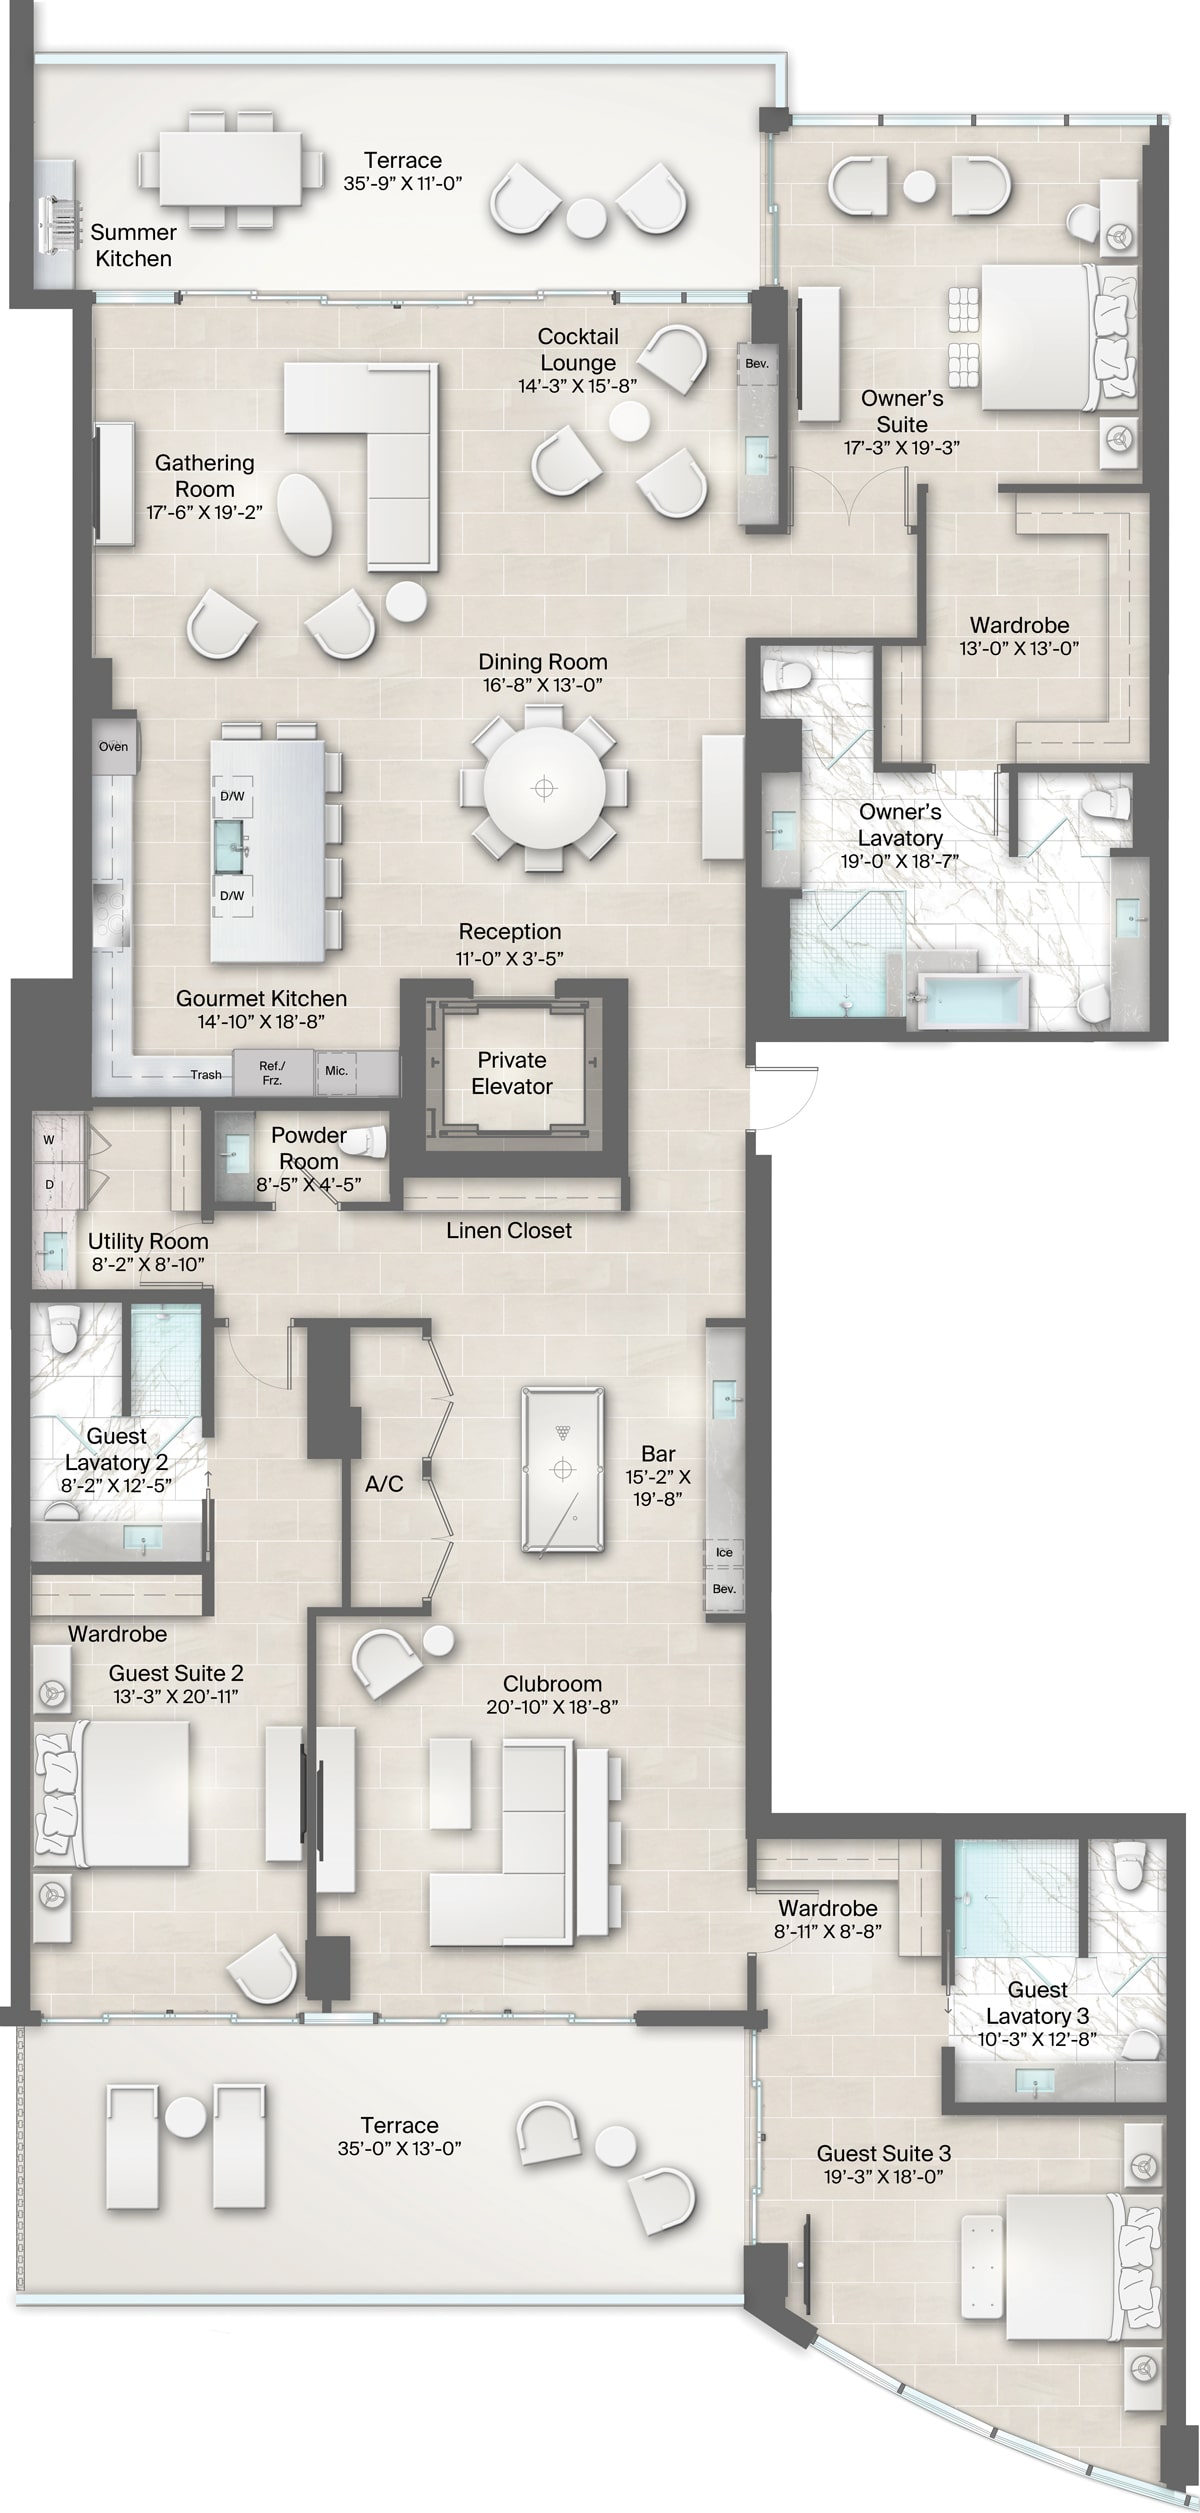 Armand Building, Plan 3 Floorplan includes 3 bedrooms, 3.5 baths, clubroom and 2 terraces